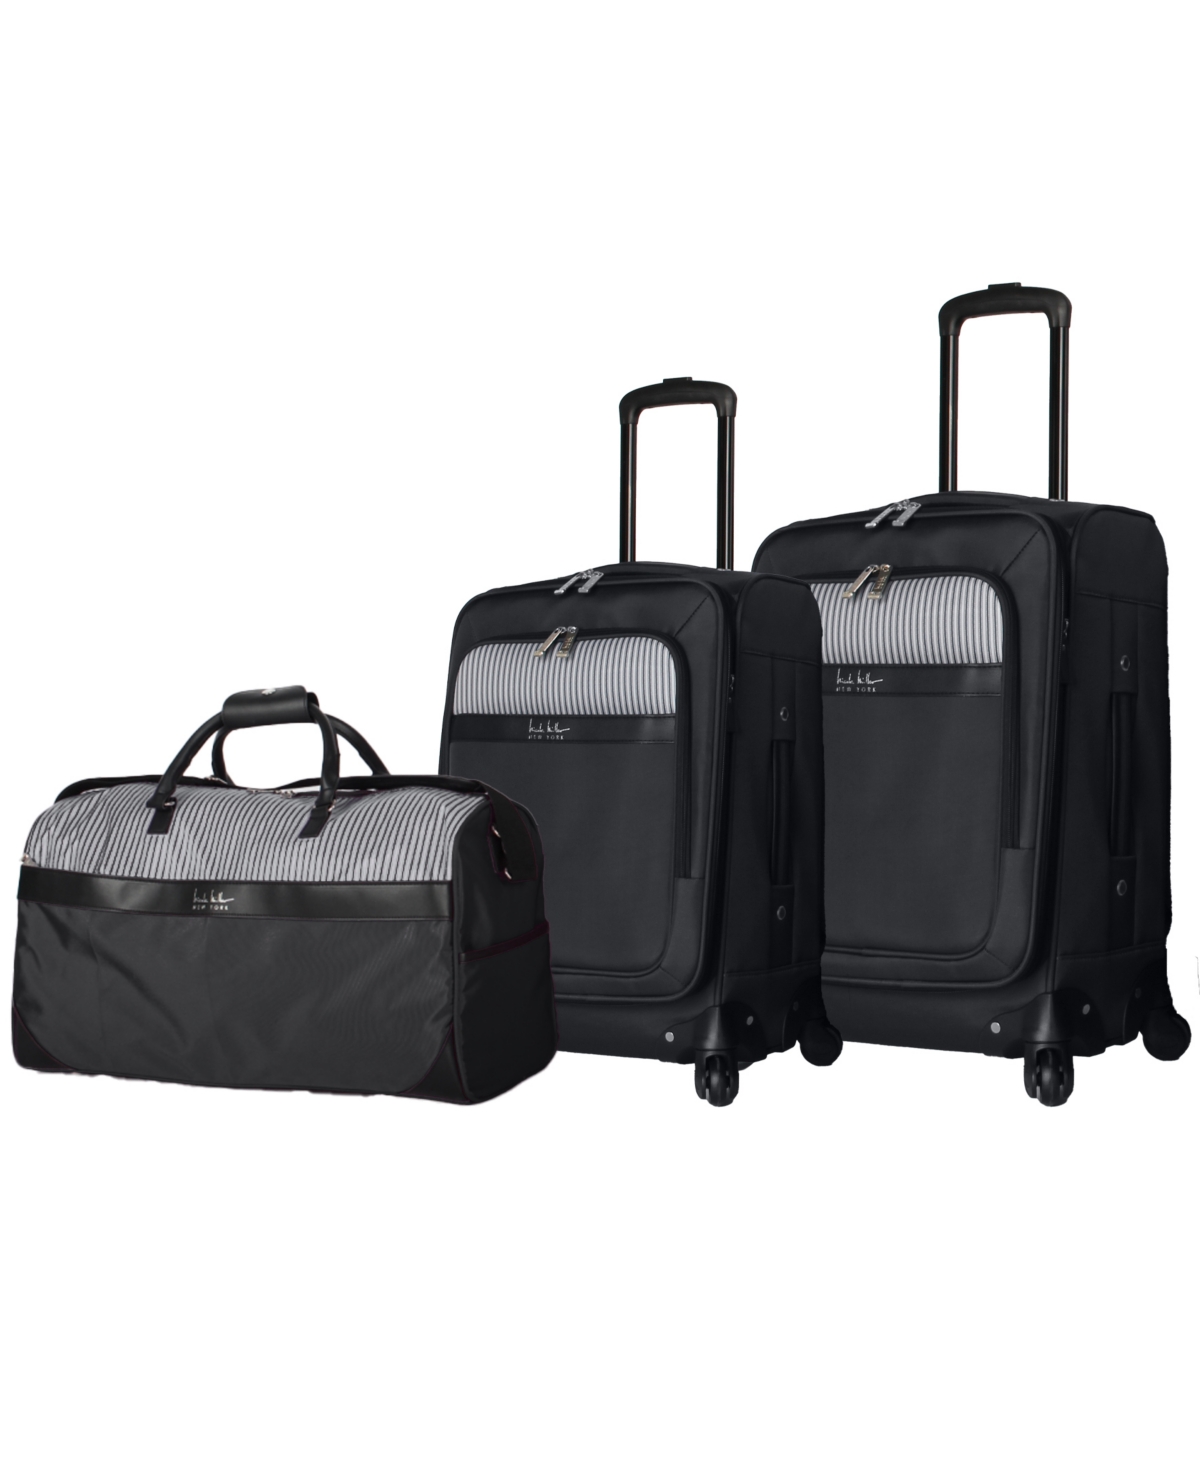 3 Piece Luggage Set - Black